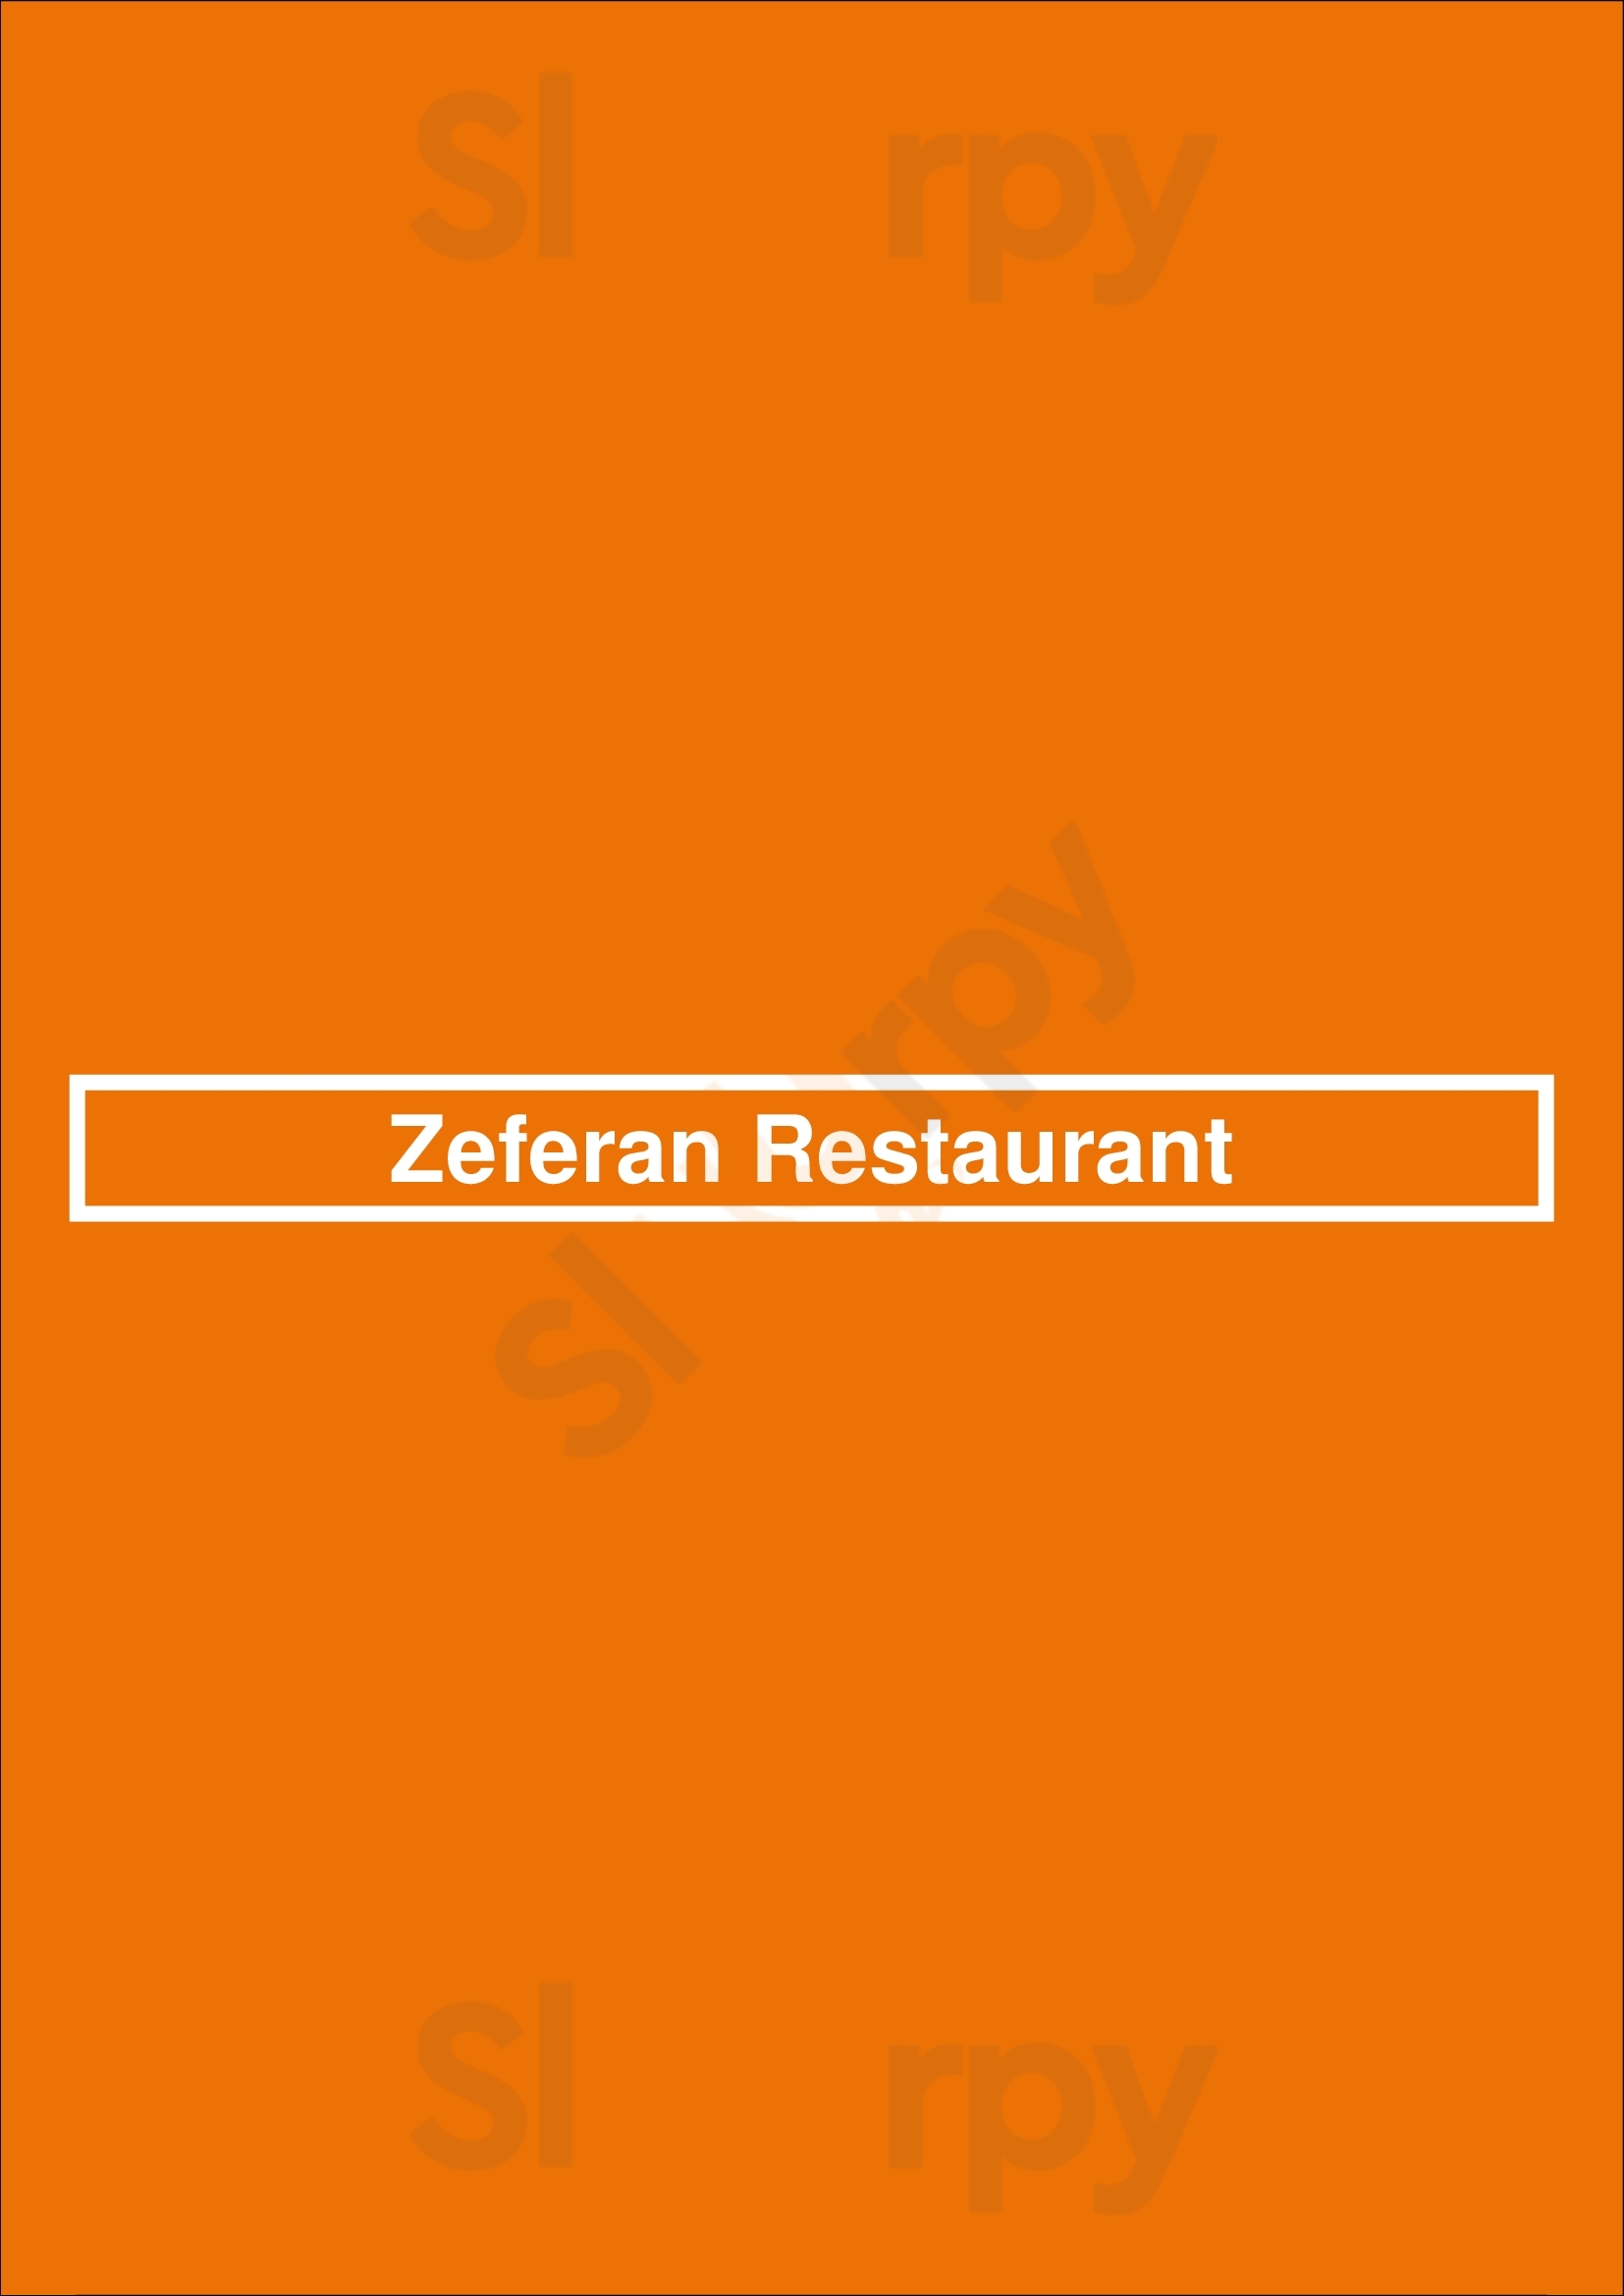 Zeferan Restaurant İstanbul Menu - 1